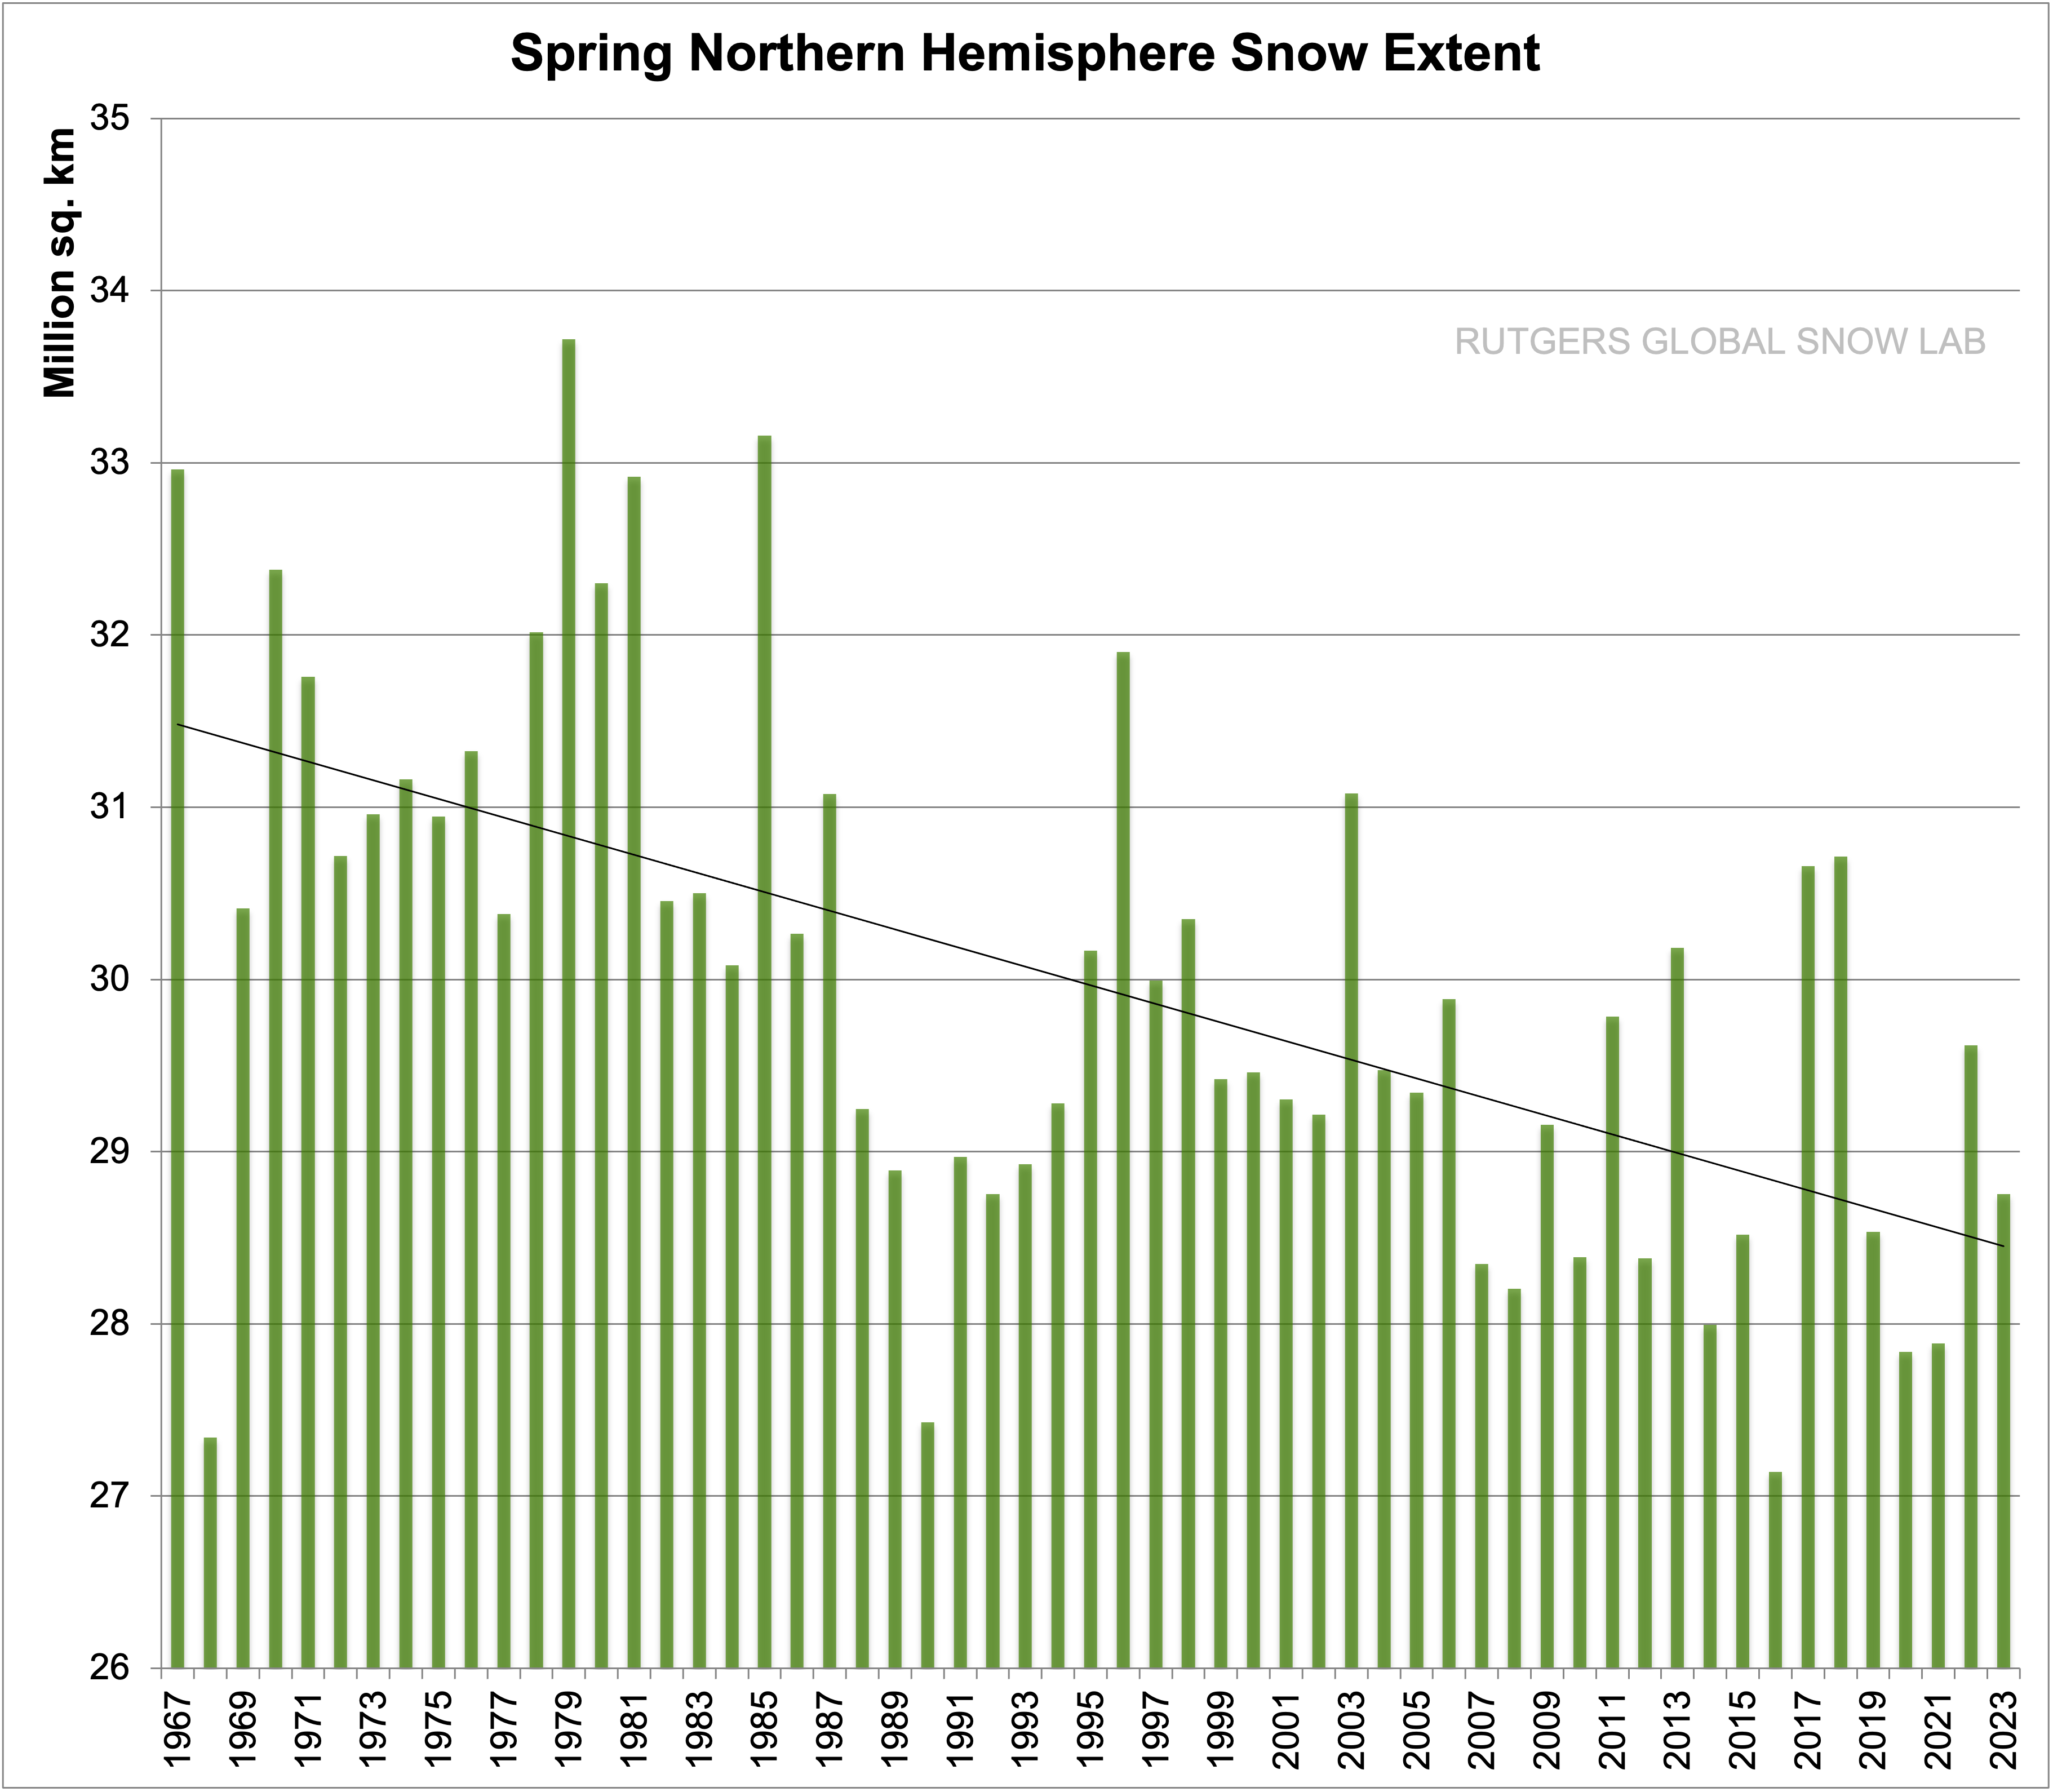 Spring Northern Hemisphere Snow Extent